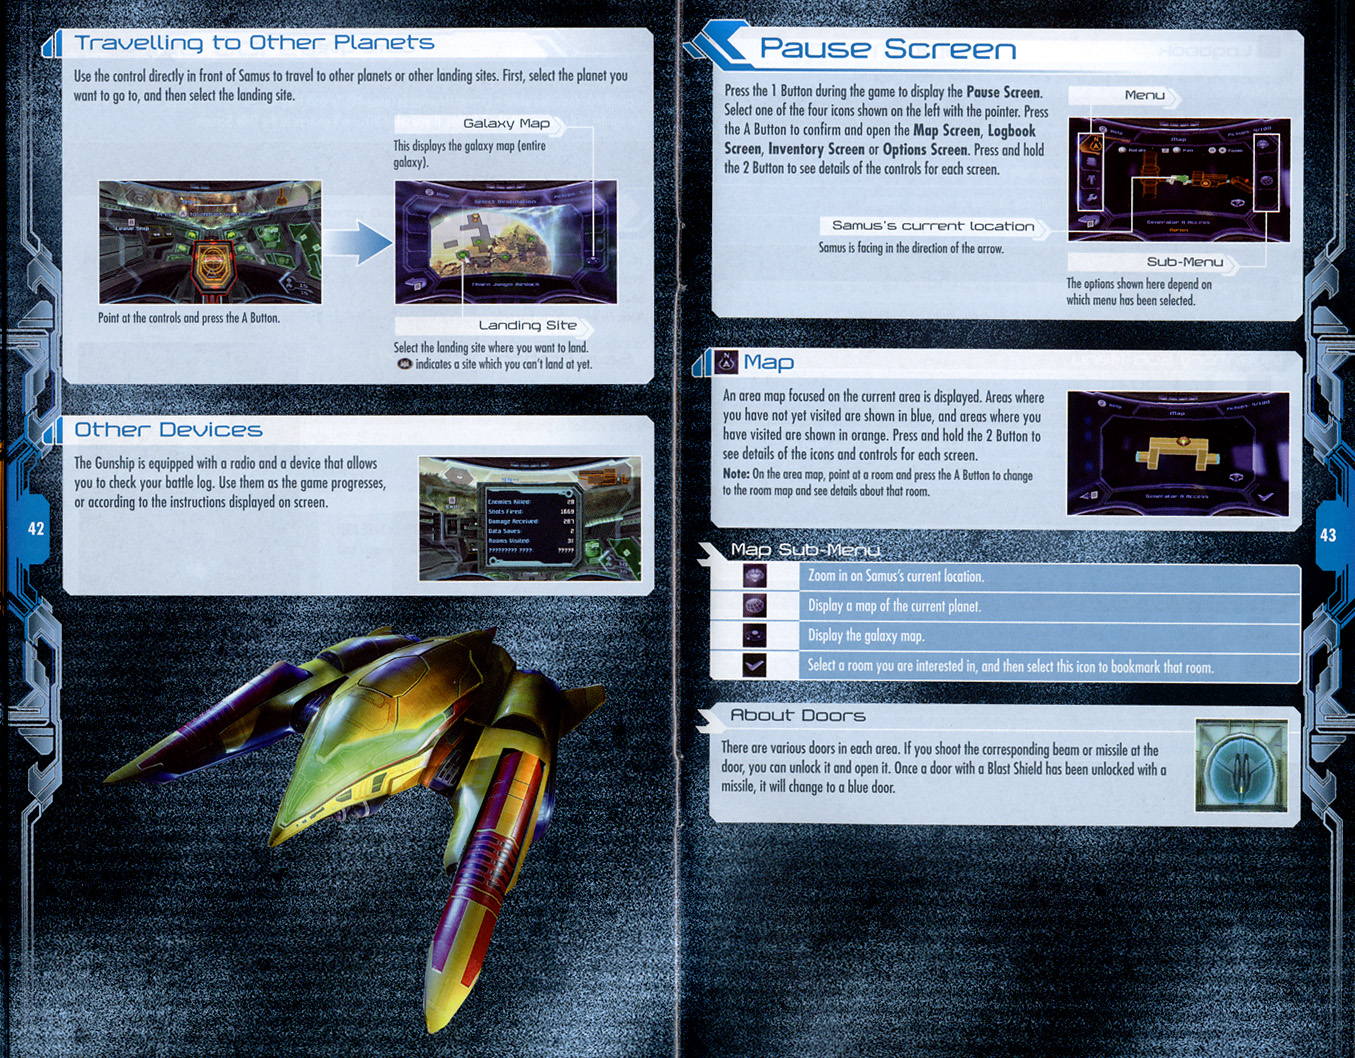 Metroid Prime Trilogy instruction manual